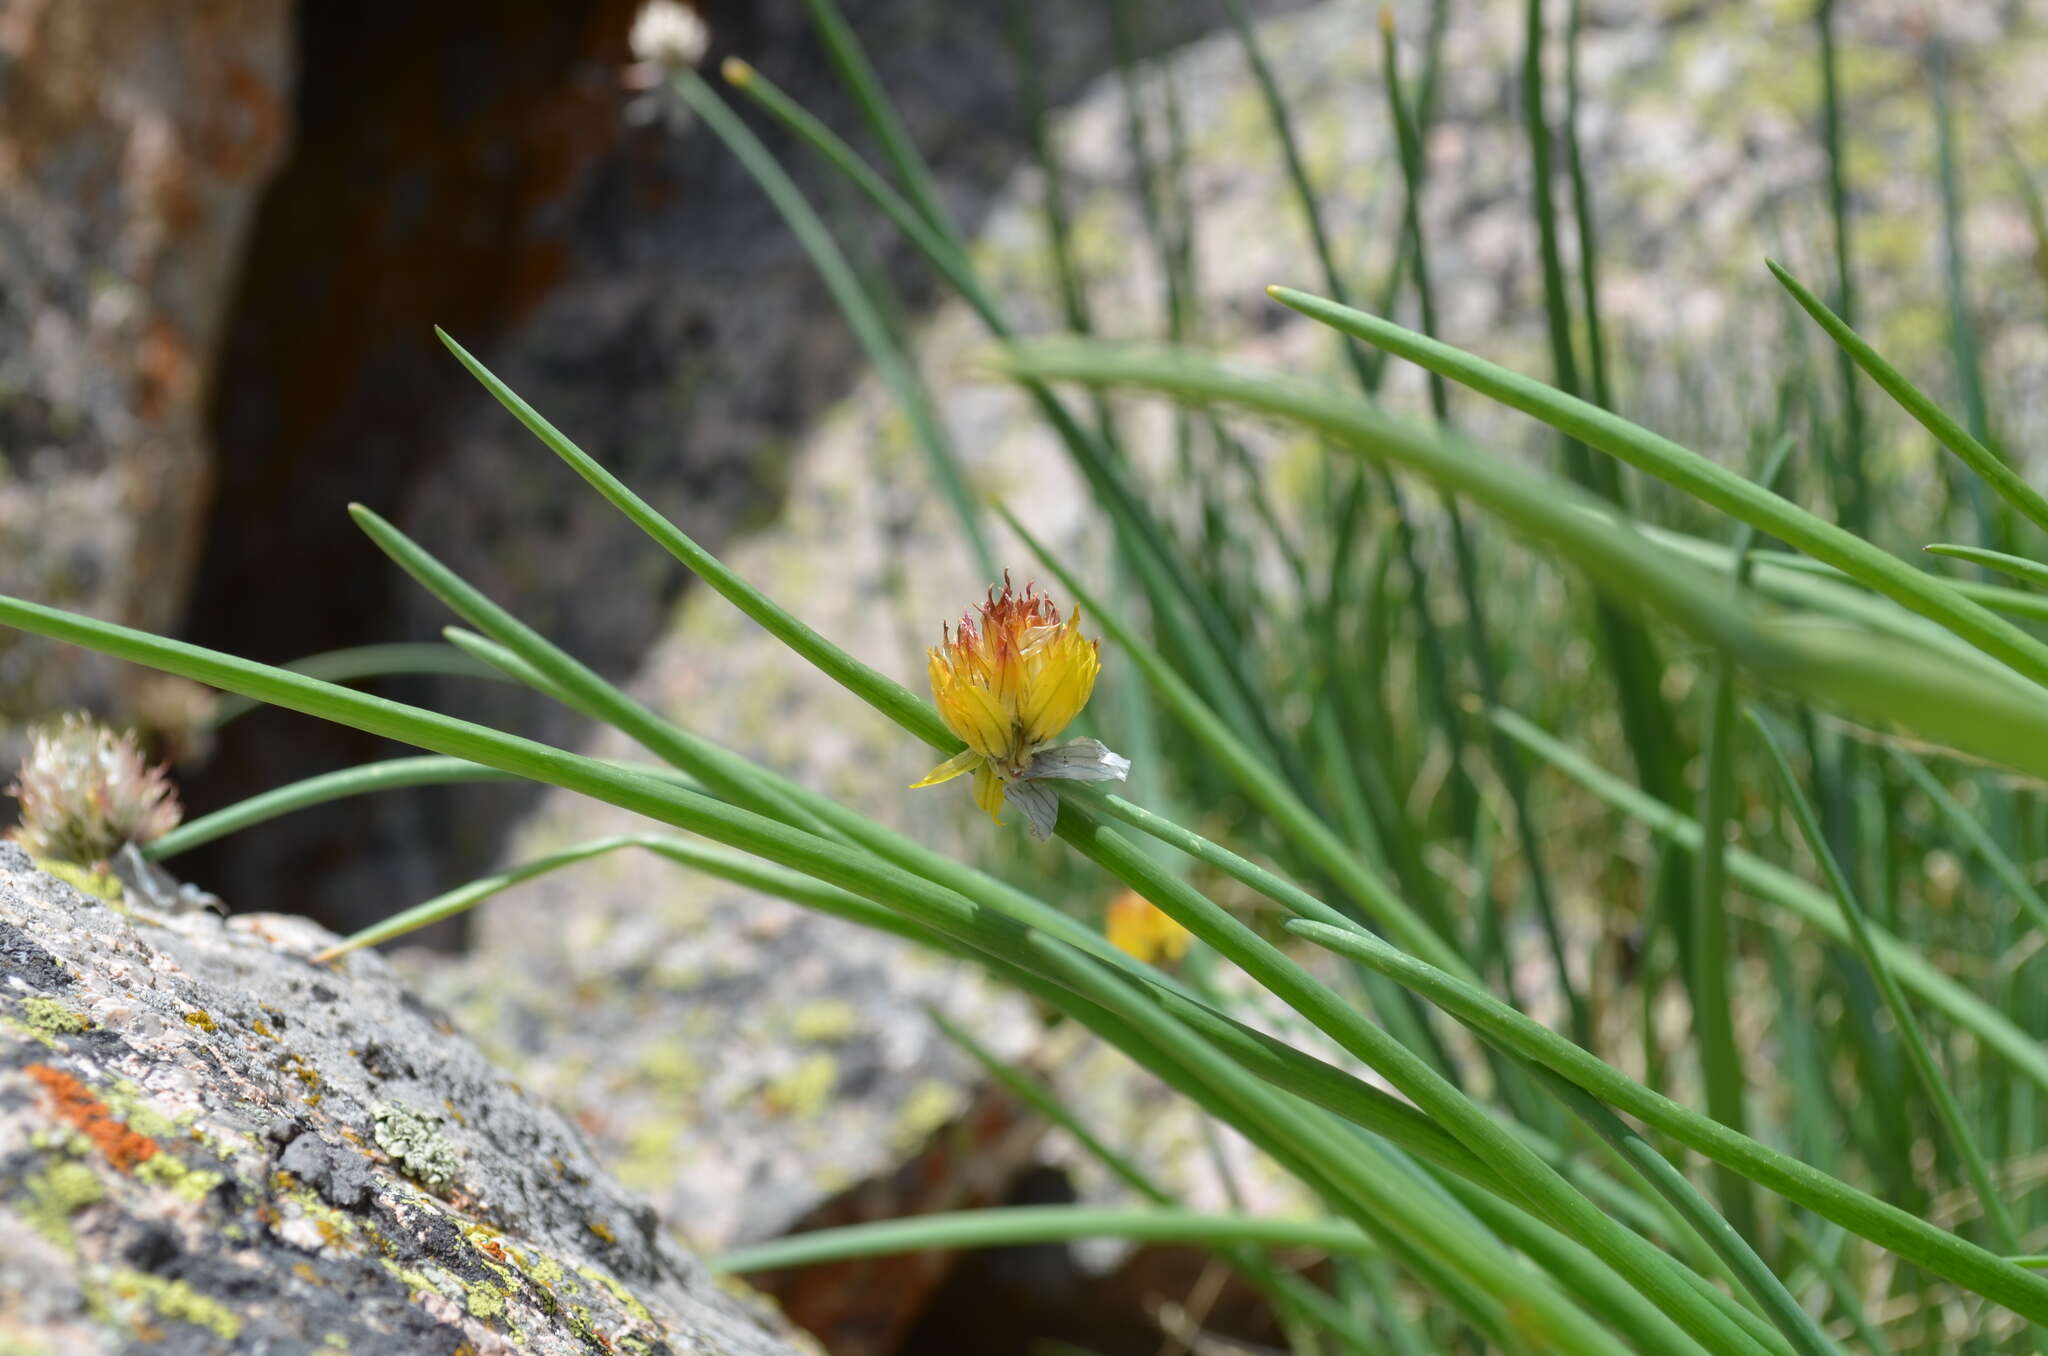 Image of <i>Allium atrosanguineum</i> var. <i>fedtschenkoanum</i>